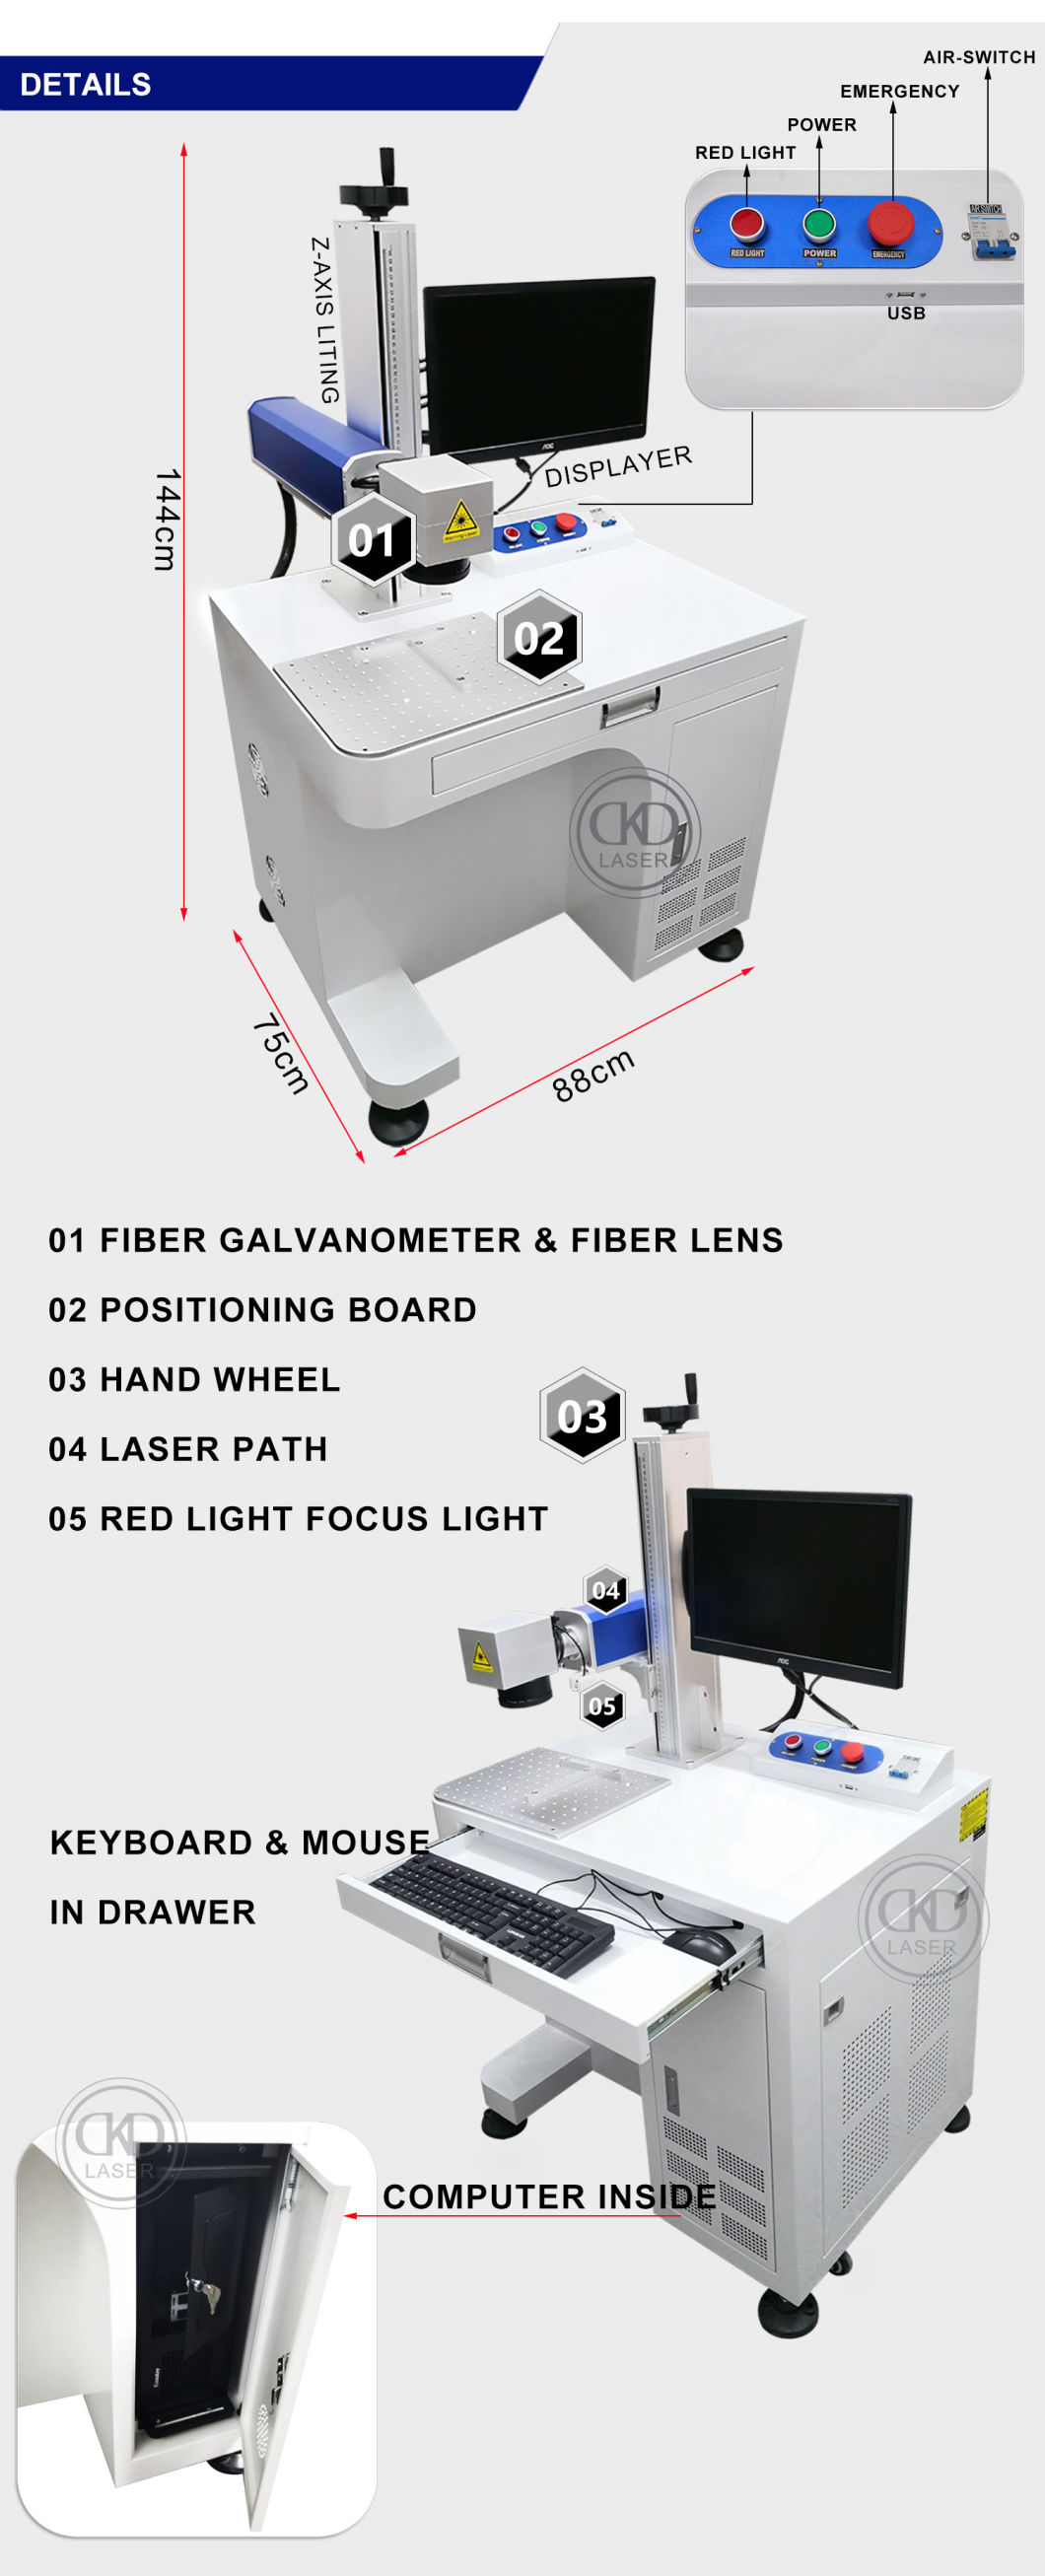 Fiber Laser Marker Manufacturers & Suppliers of Fiber Laser Marking Machine